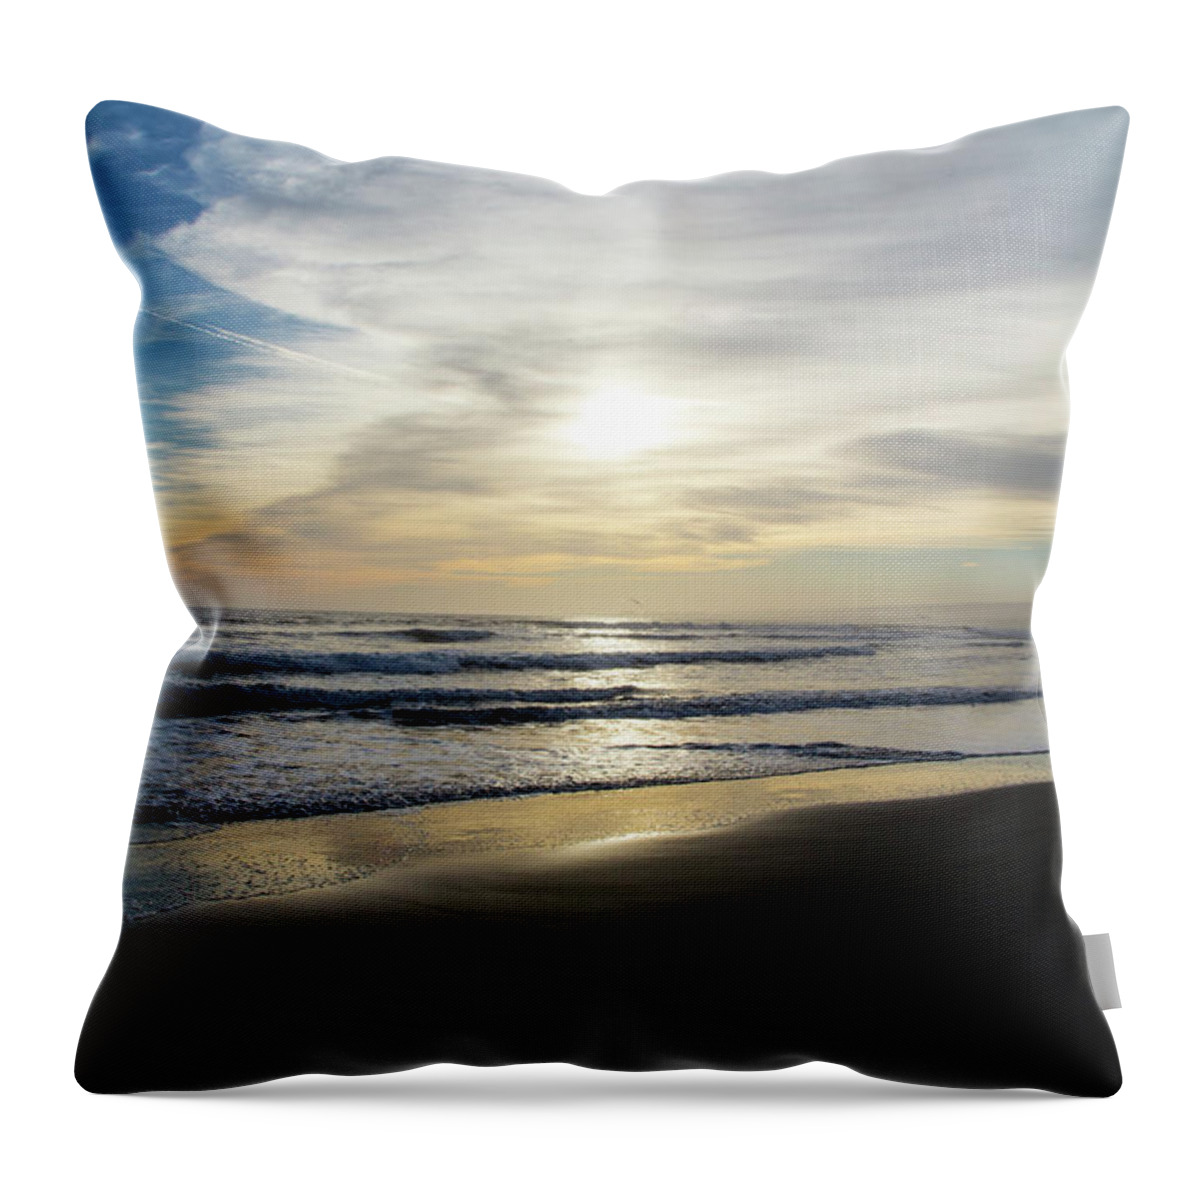 Sunset Throw Pillow featuring the photograph Sunset beach by Jason Hughes